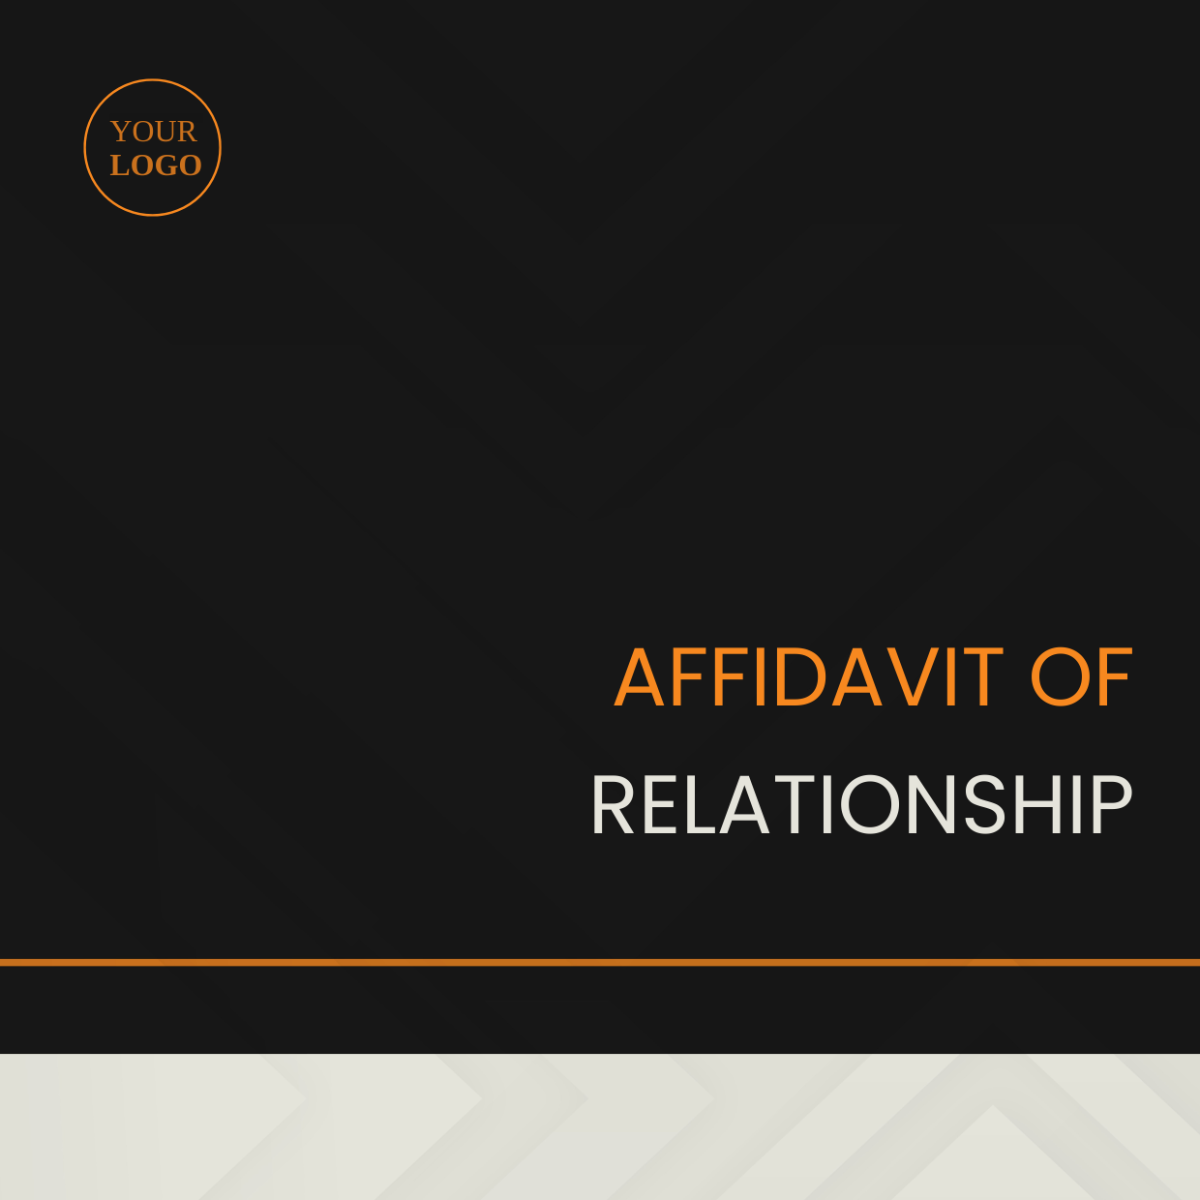 Affidavit of Relationship Template